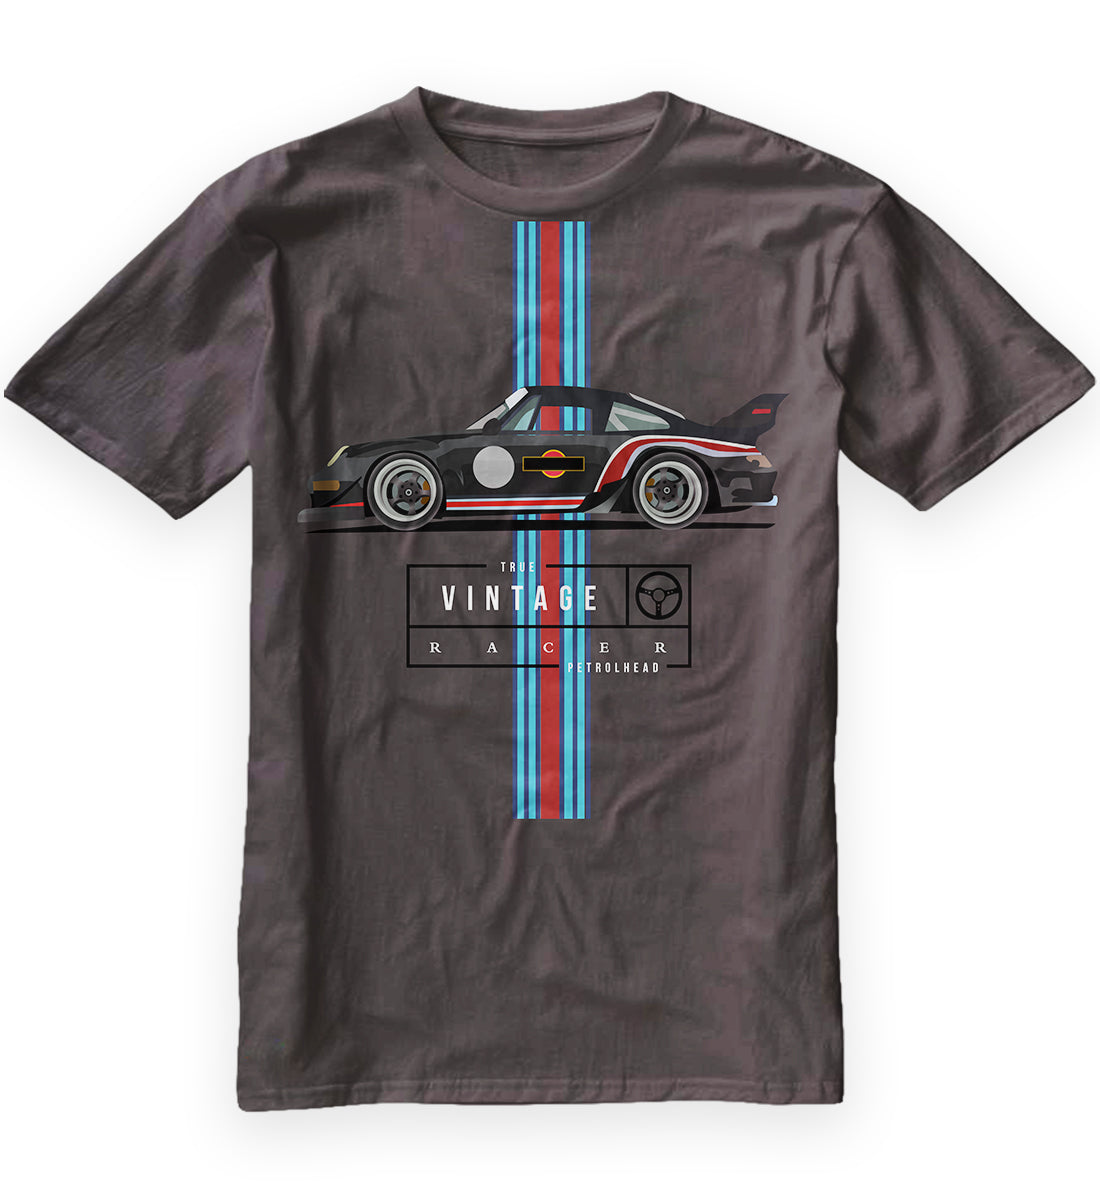 True vintage racer (2) Essential T-Shirt